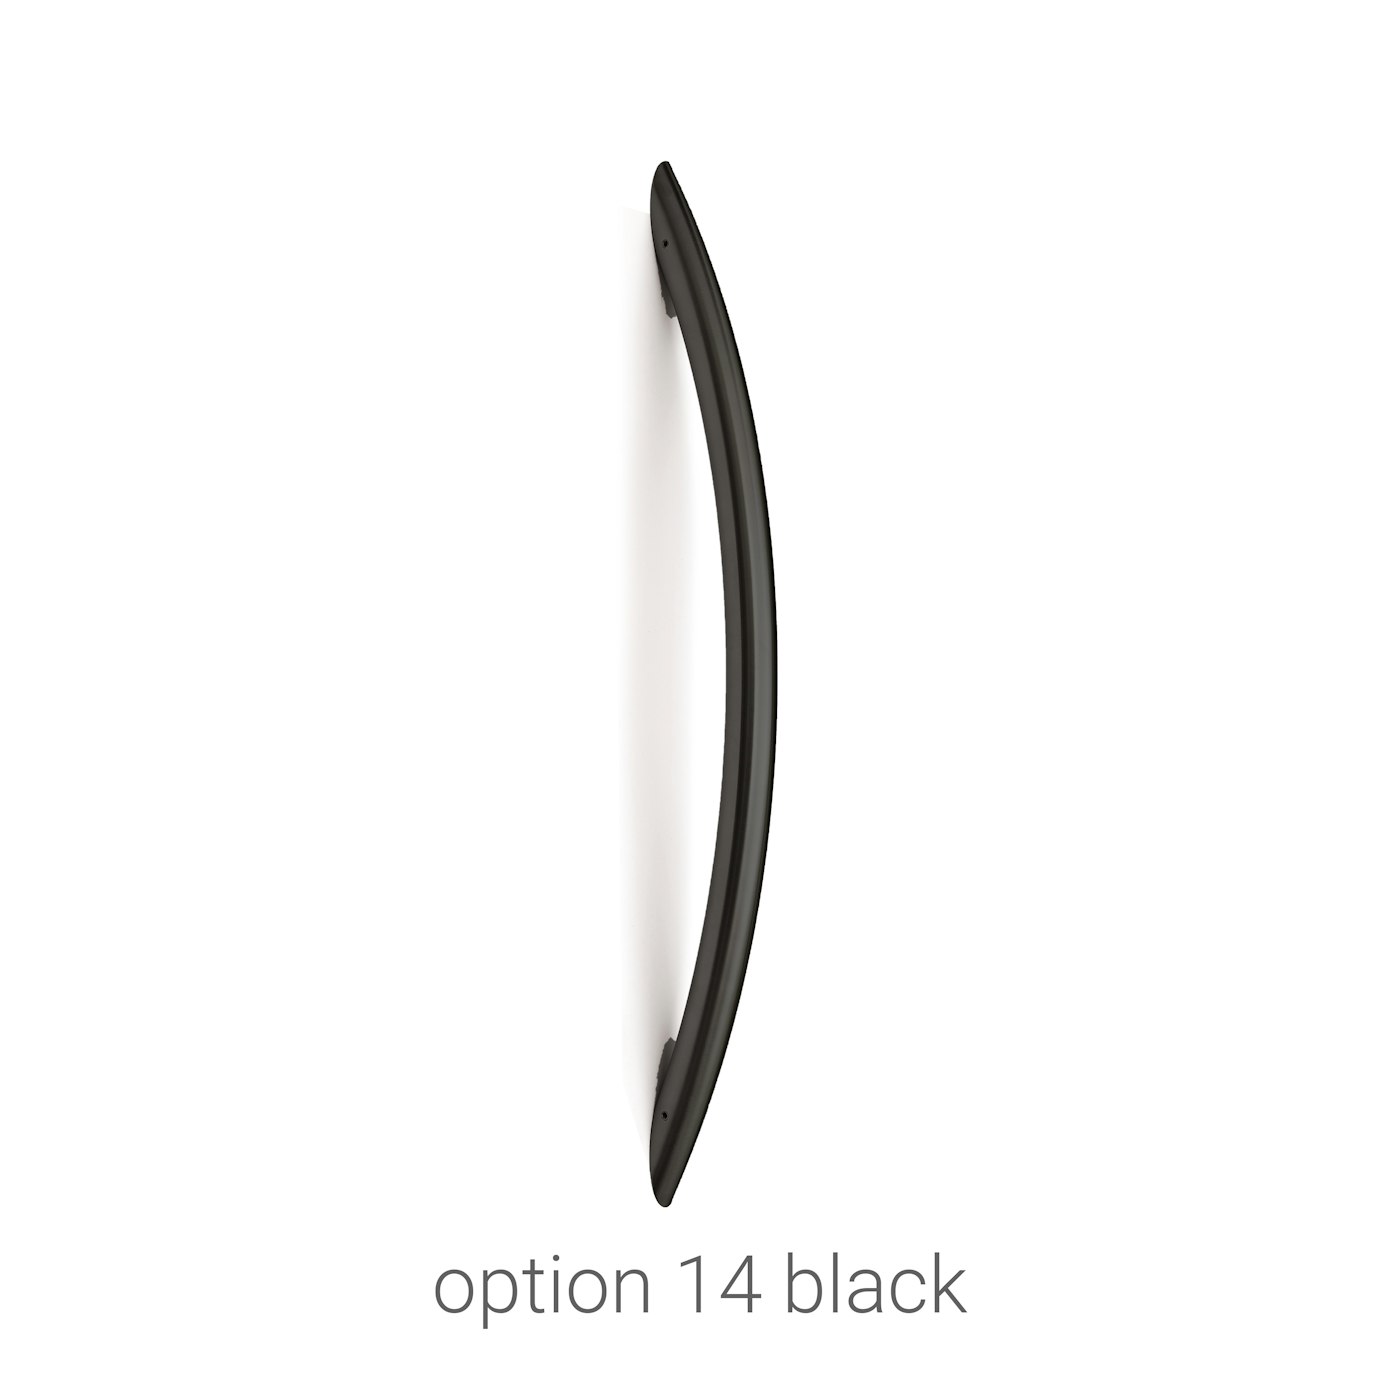 option 14 black